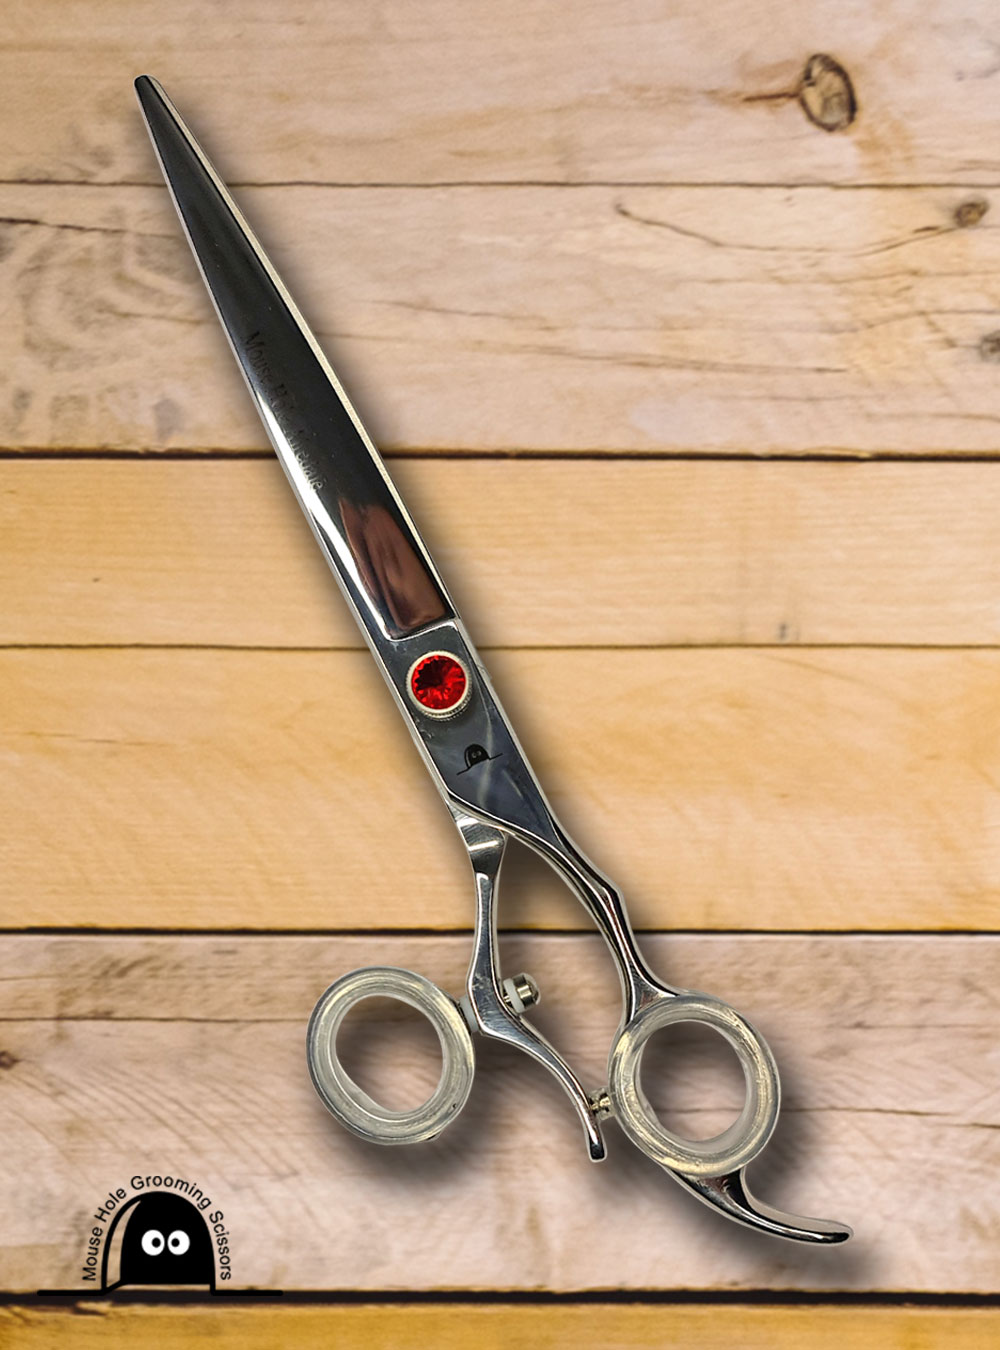 Airedale Swivel Straight 8". Pet grooming scissors